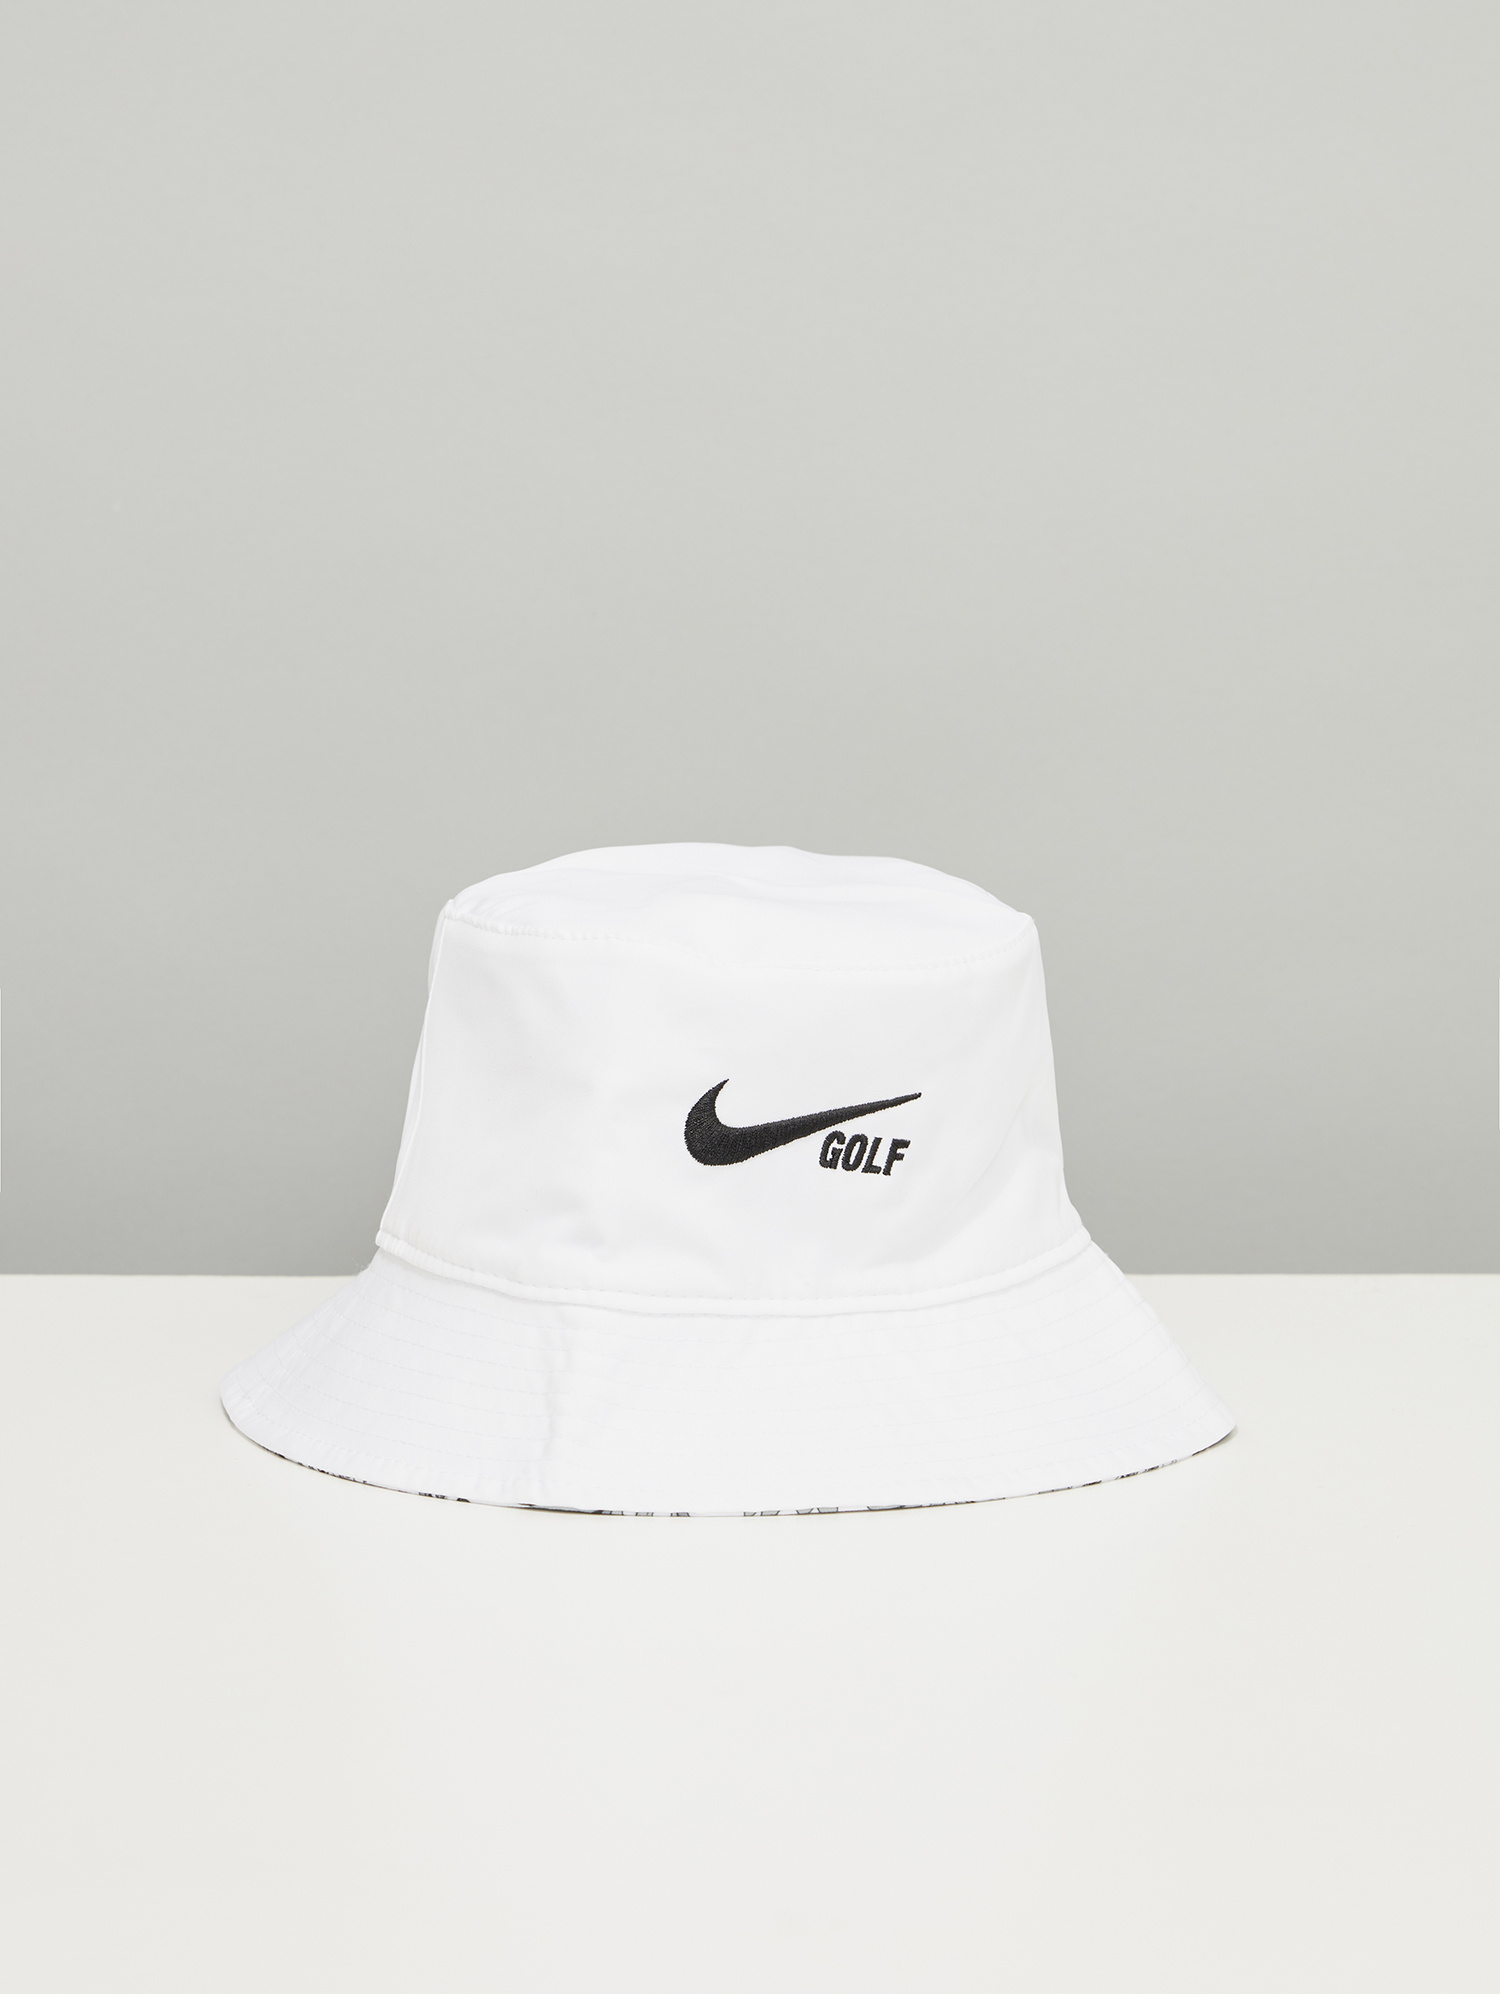 Chapeau bucket Nike reversible blanc fleurit des Canadiens - Club de Hockey  des Canadiens